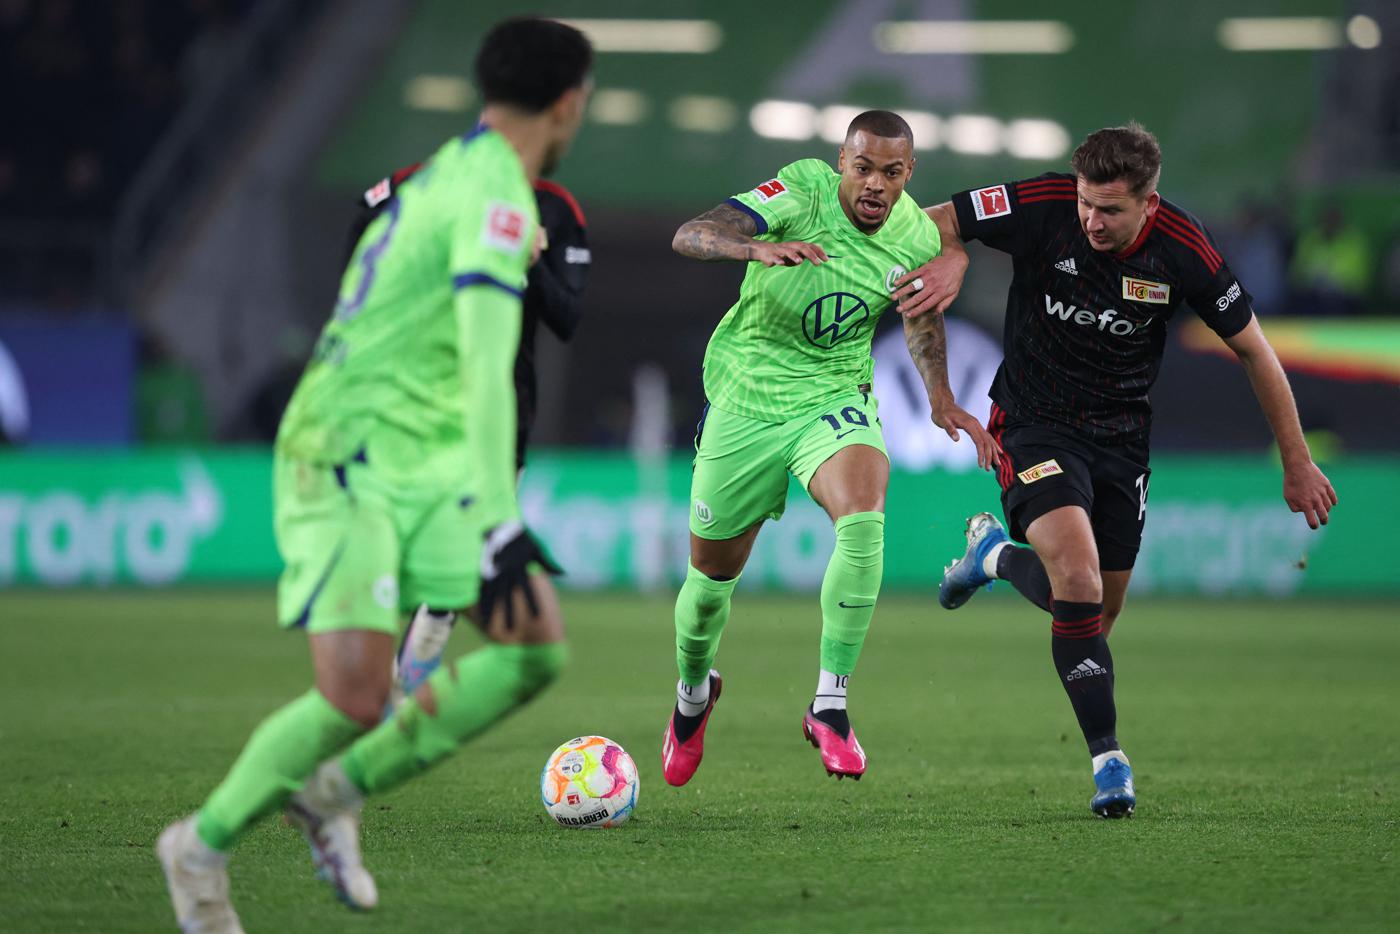 Wolfsburg v Union - 1:1. German Championship, round 24. Match review, statistics.